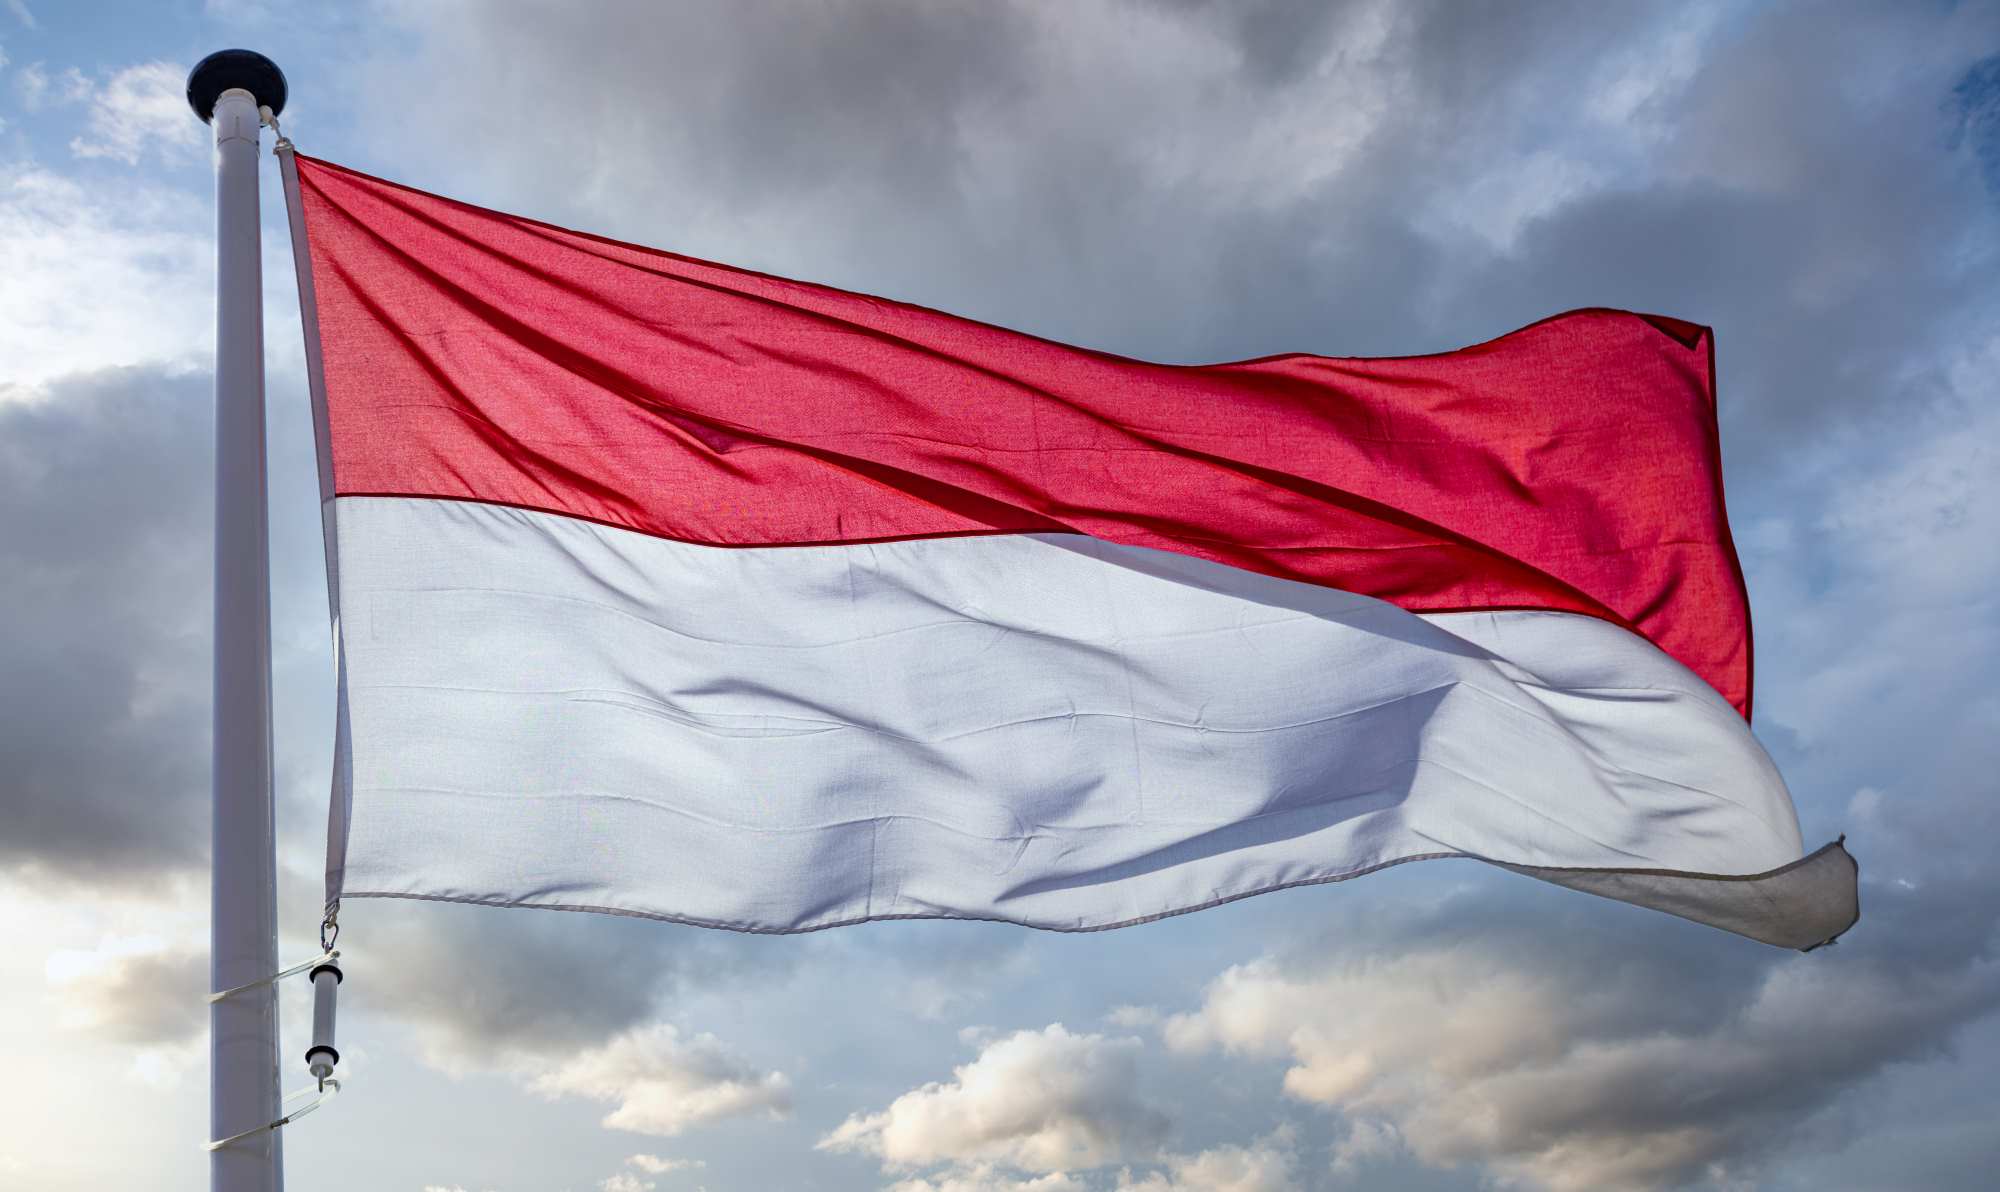 indonesia flag waving against cloudy sky 2023 11 27 04 54 16 utc